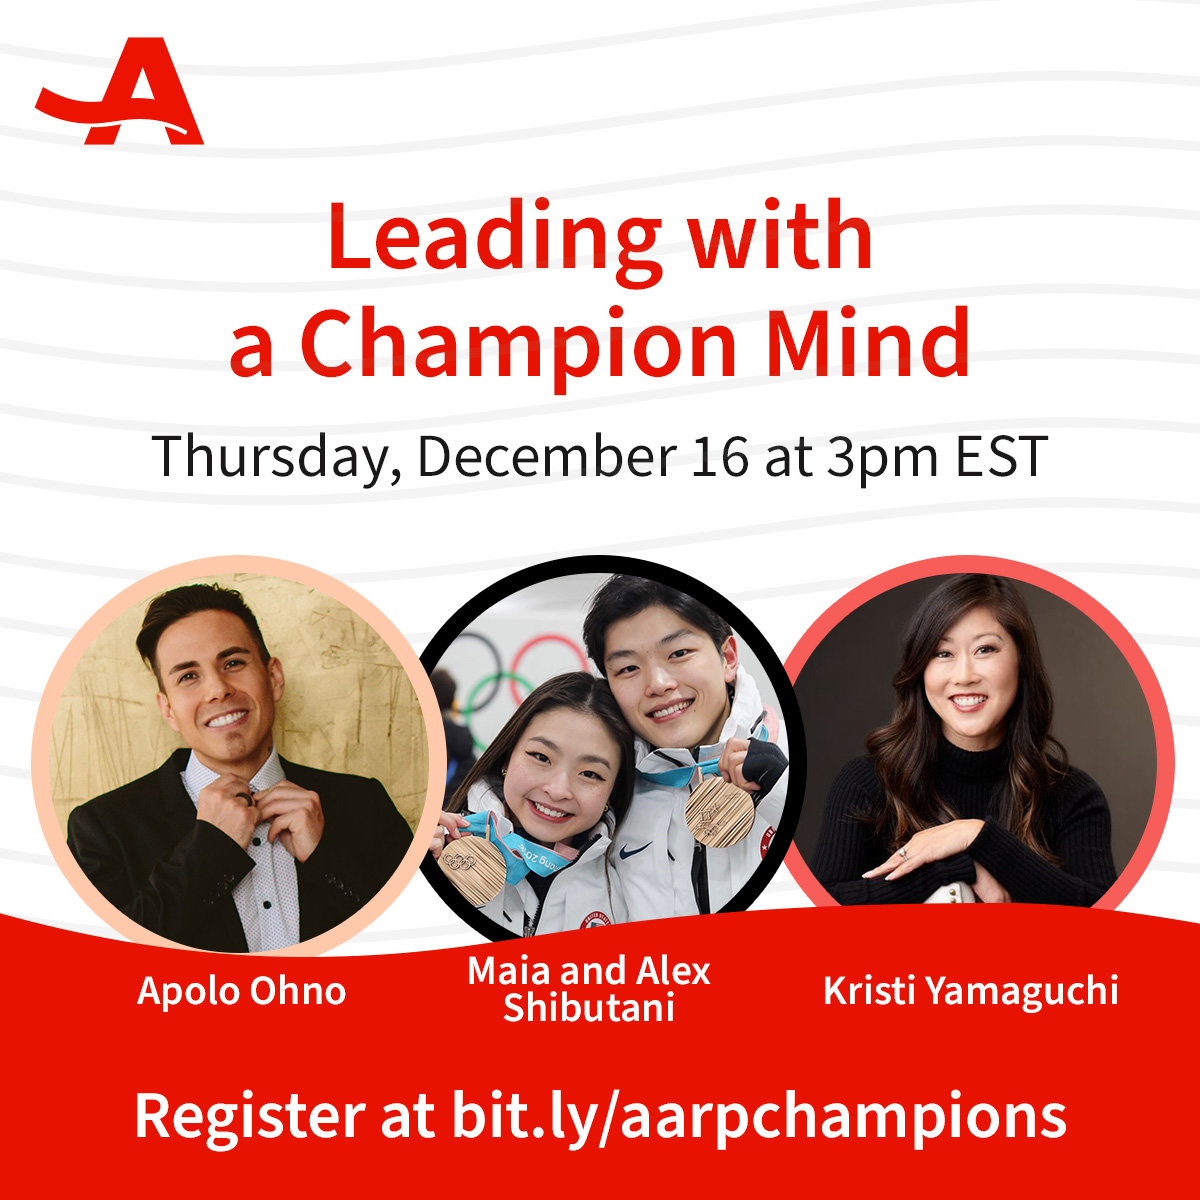 AARP乐龄会热烈呈献“以冠军思维领导”(Leading with a Champion Mind)： 由Apolo Ohno、Kristi Yamaguchi